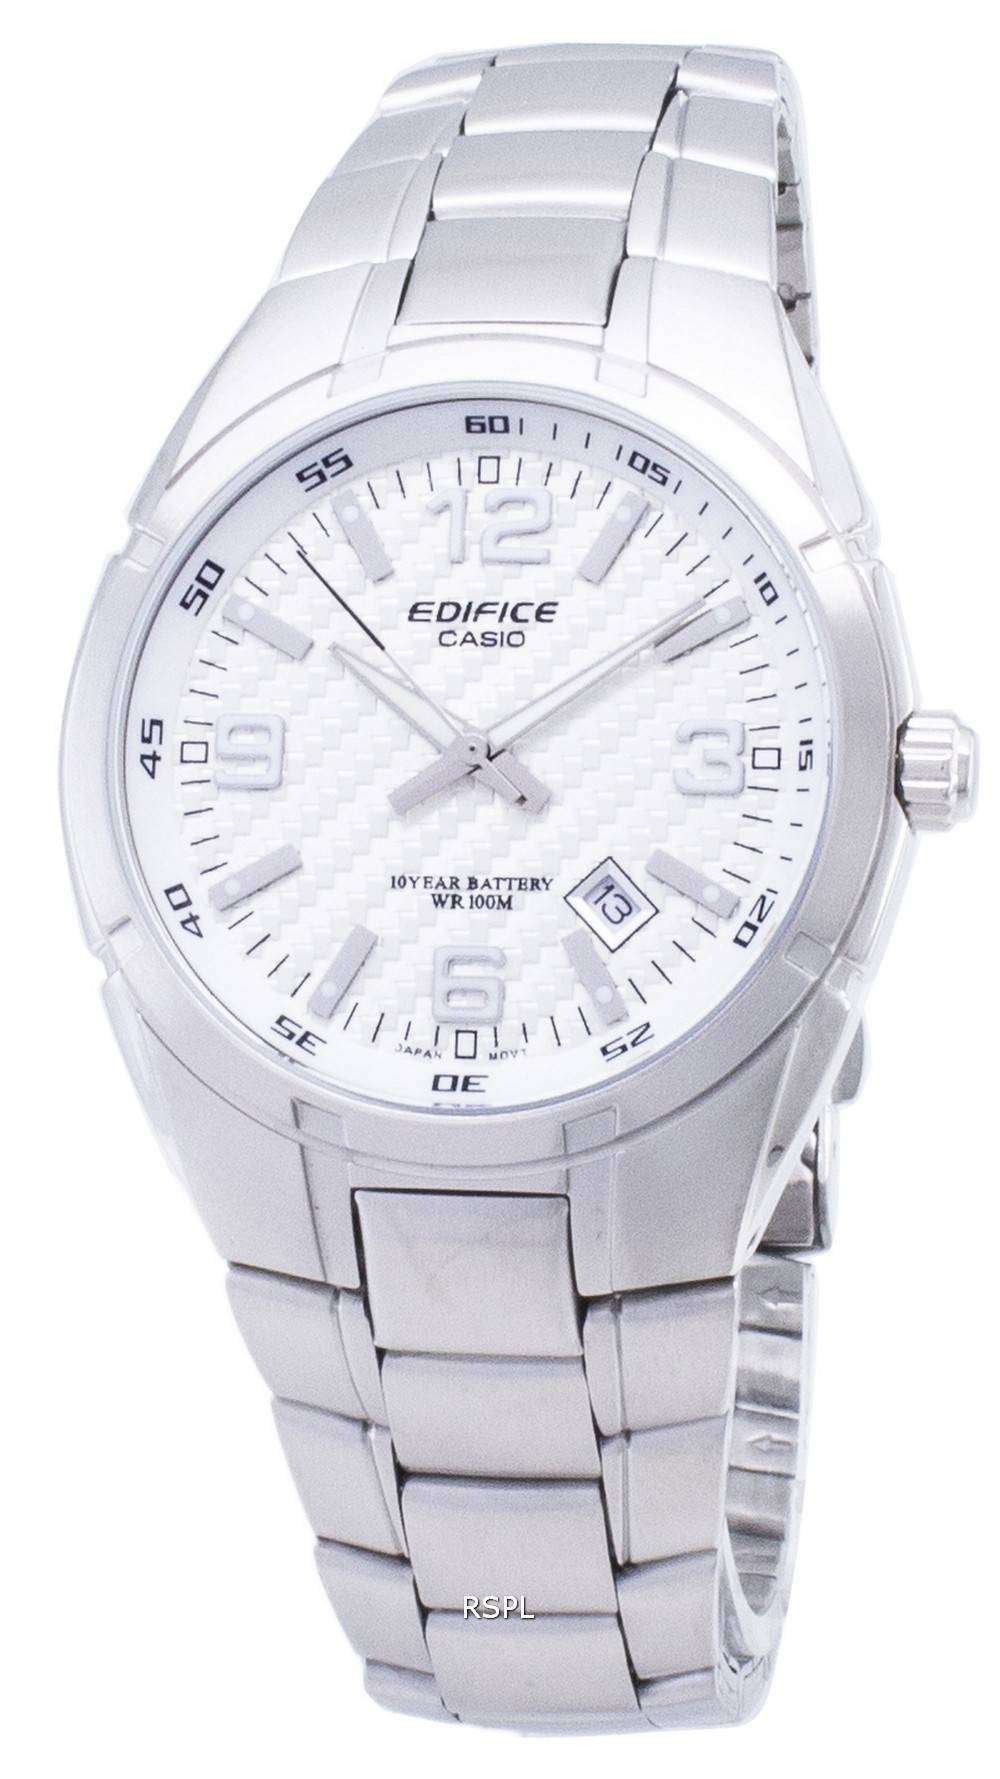 Casio Edifice Chronograph Ef-556sg-7avdf (ed426) Men's Watch : Amazon.in:  Fashion